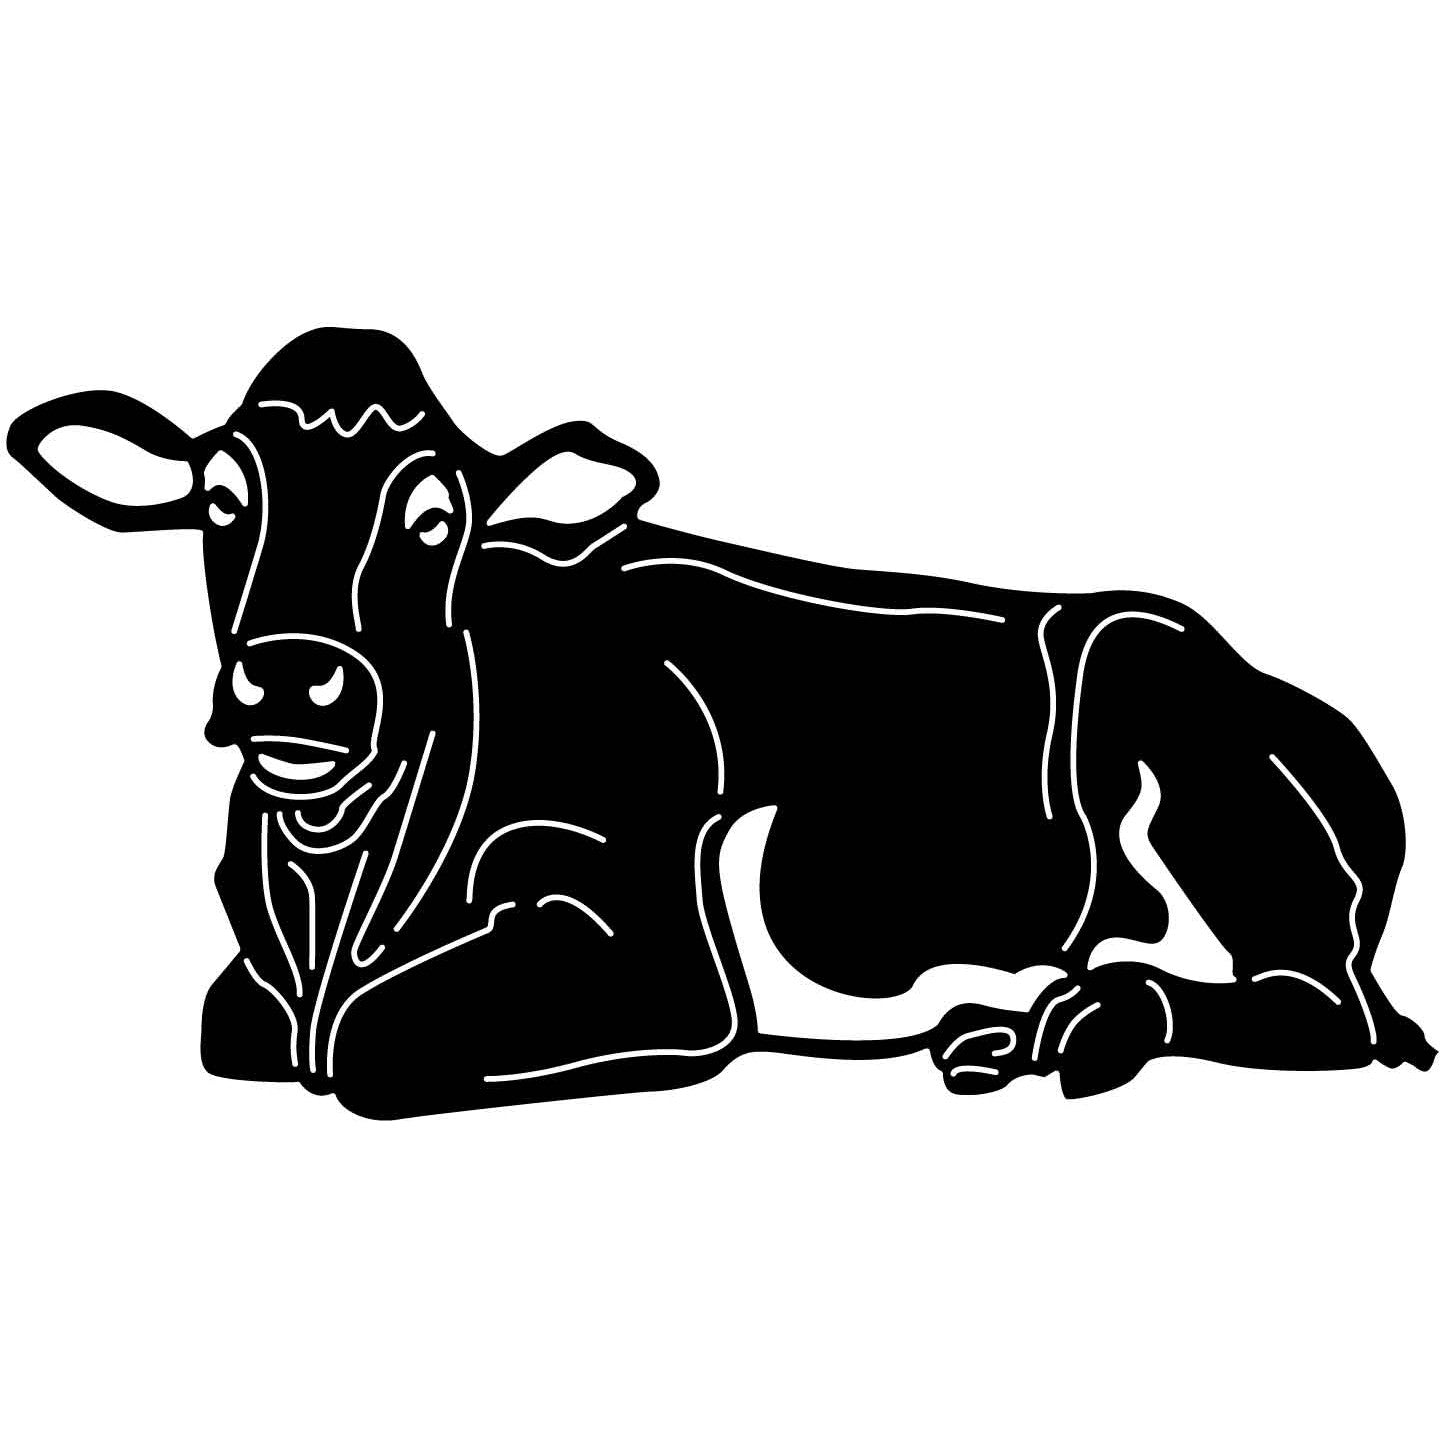 Bulls Longhorns Cows and Calves 14